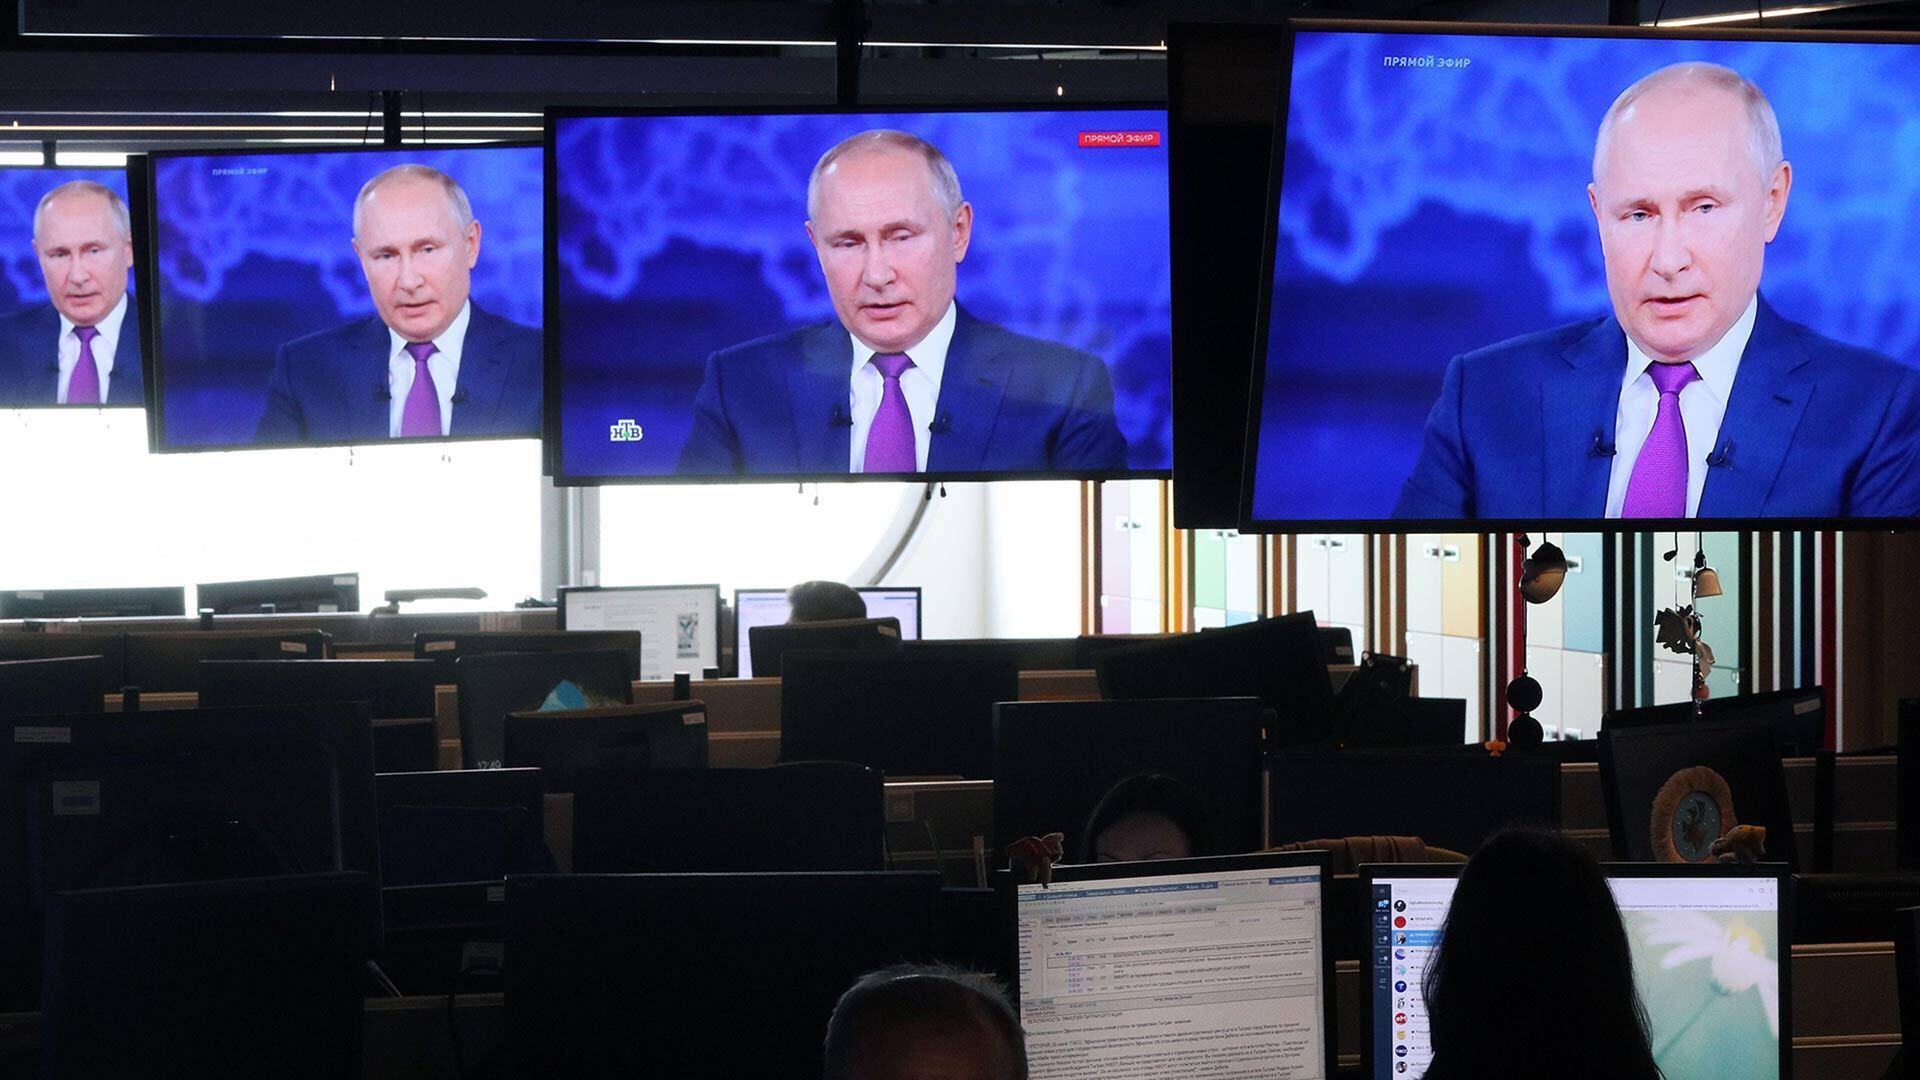 Putin across four TV screens